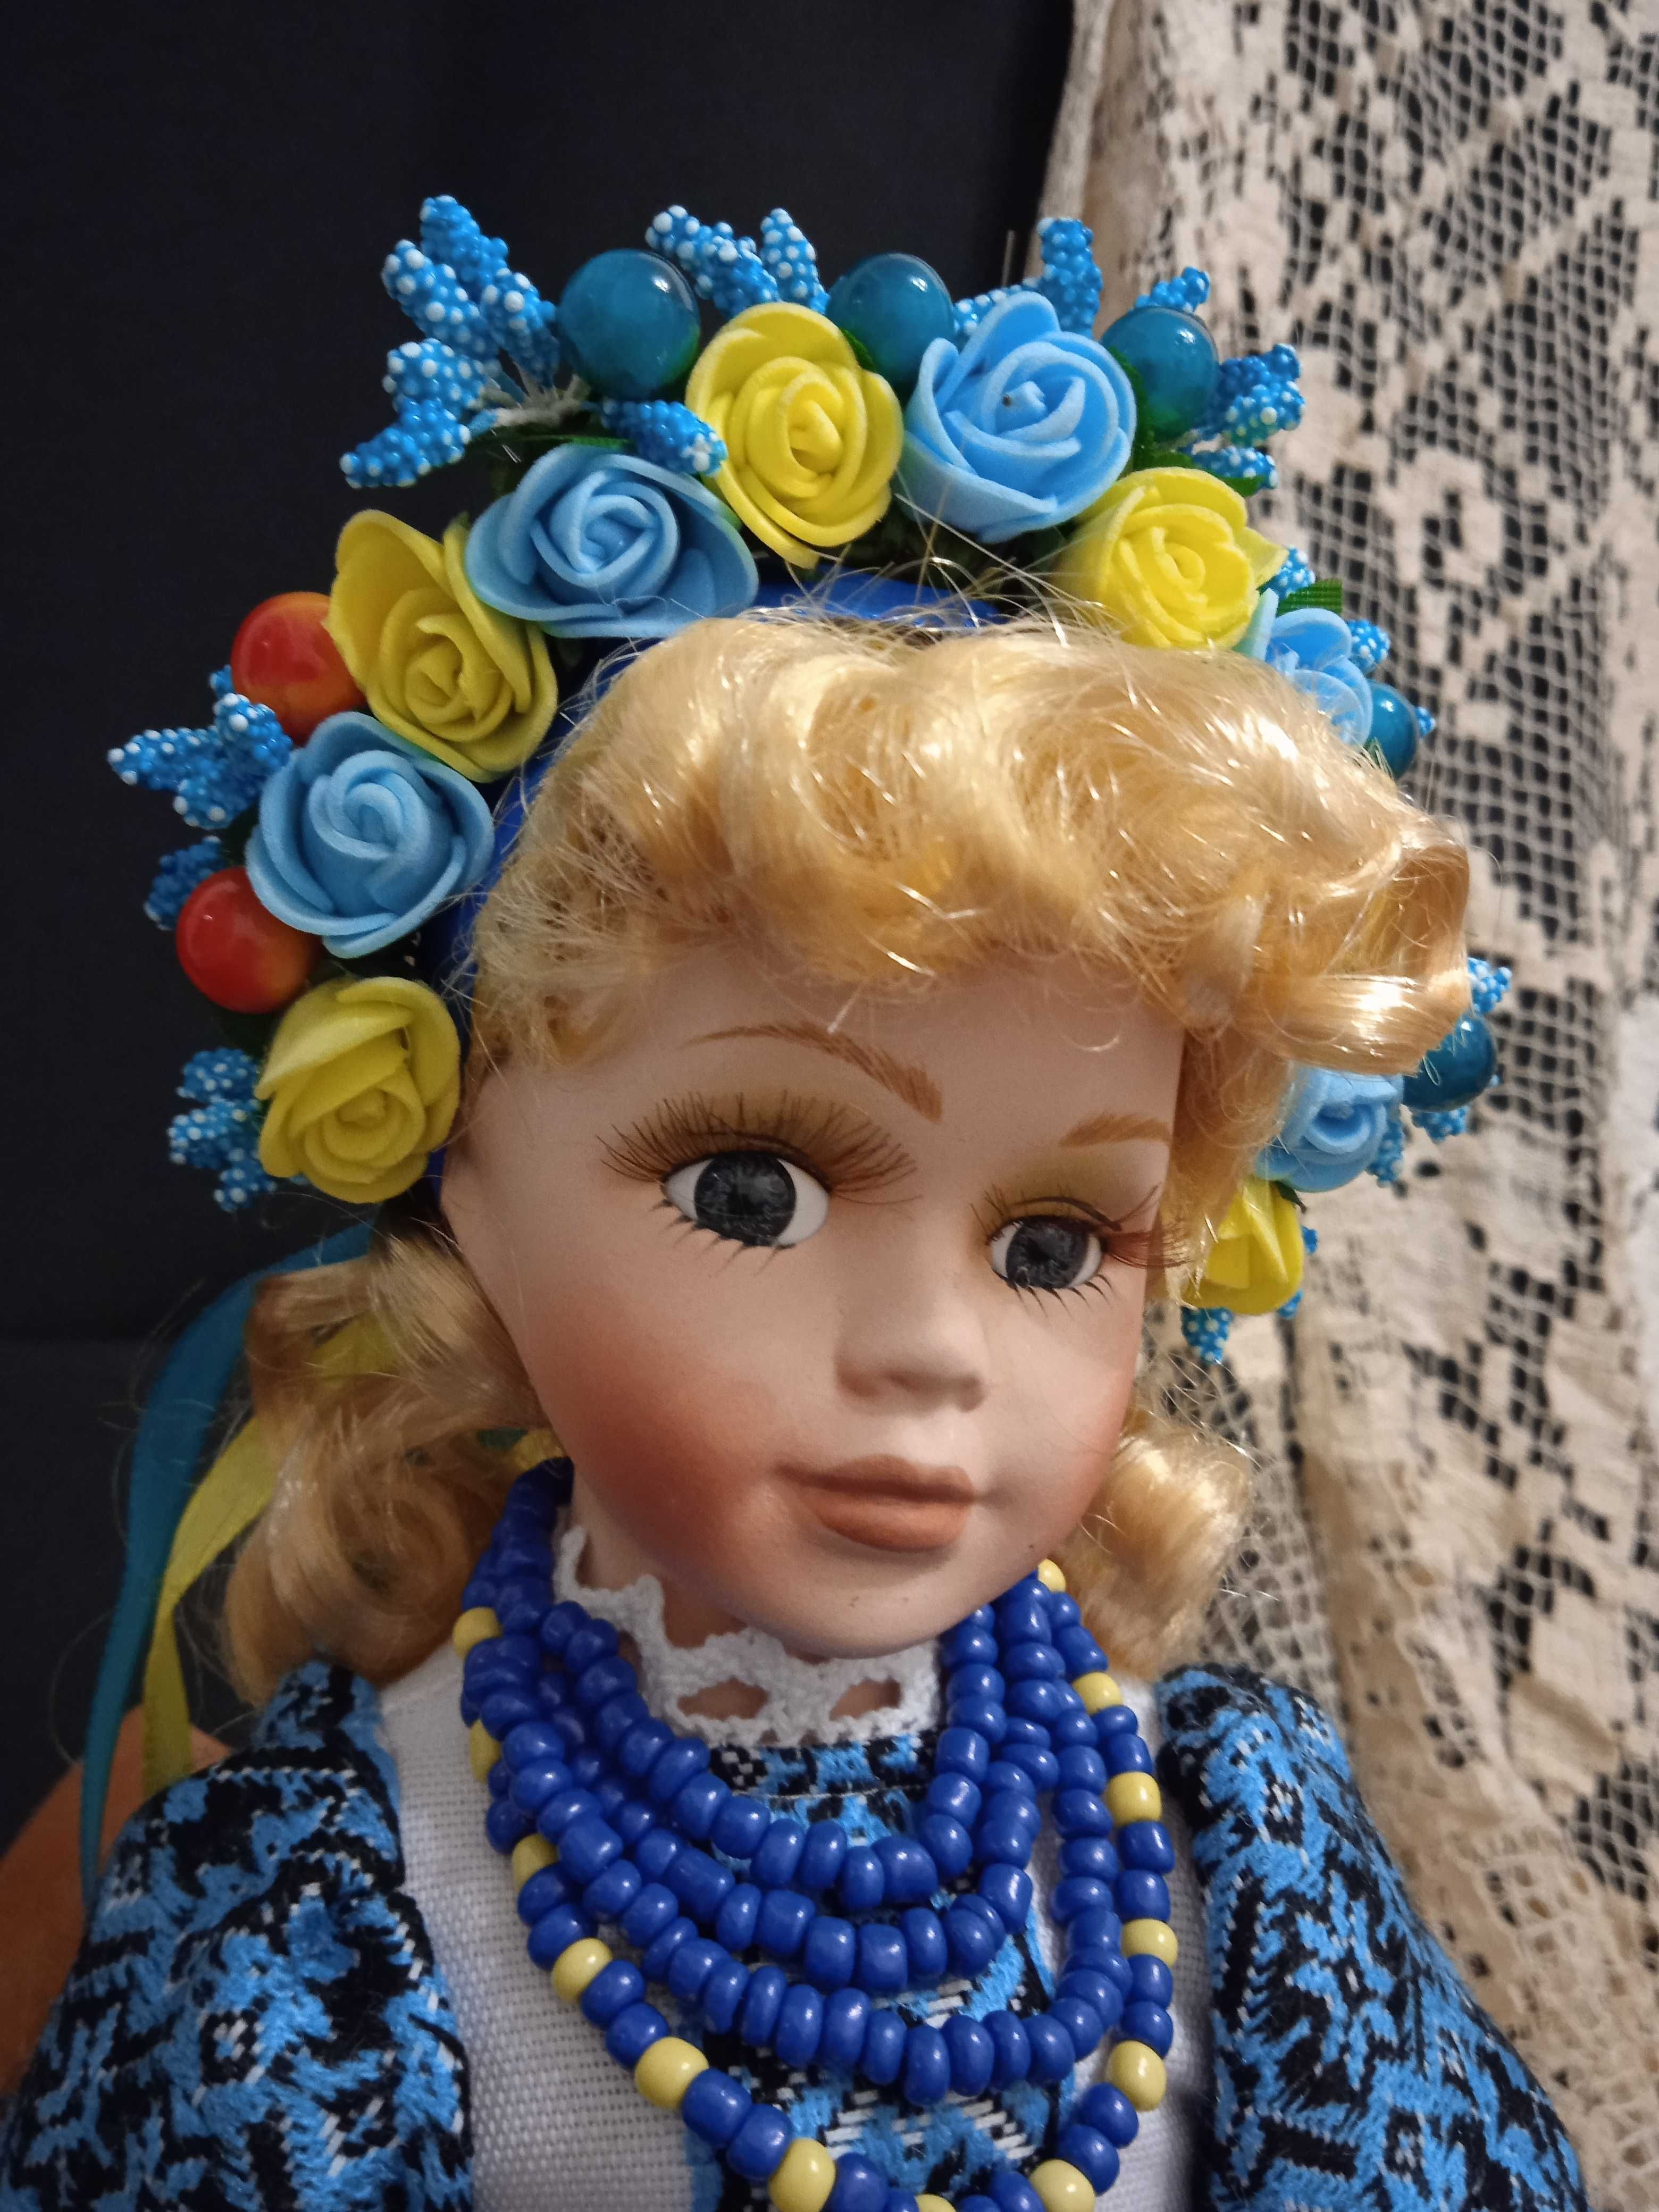 Фарфоровая кукла №21 порцелянова лялька українка украинка